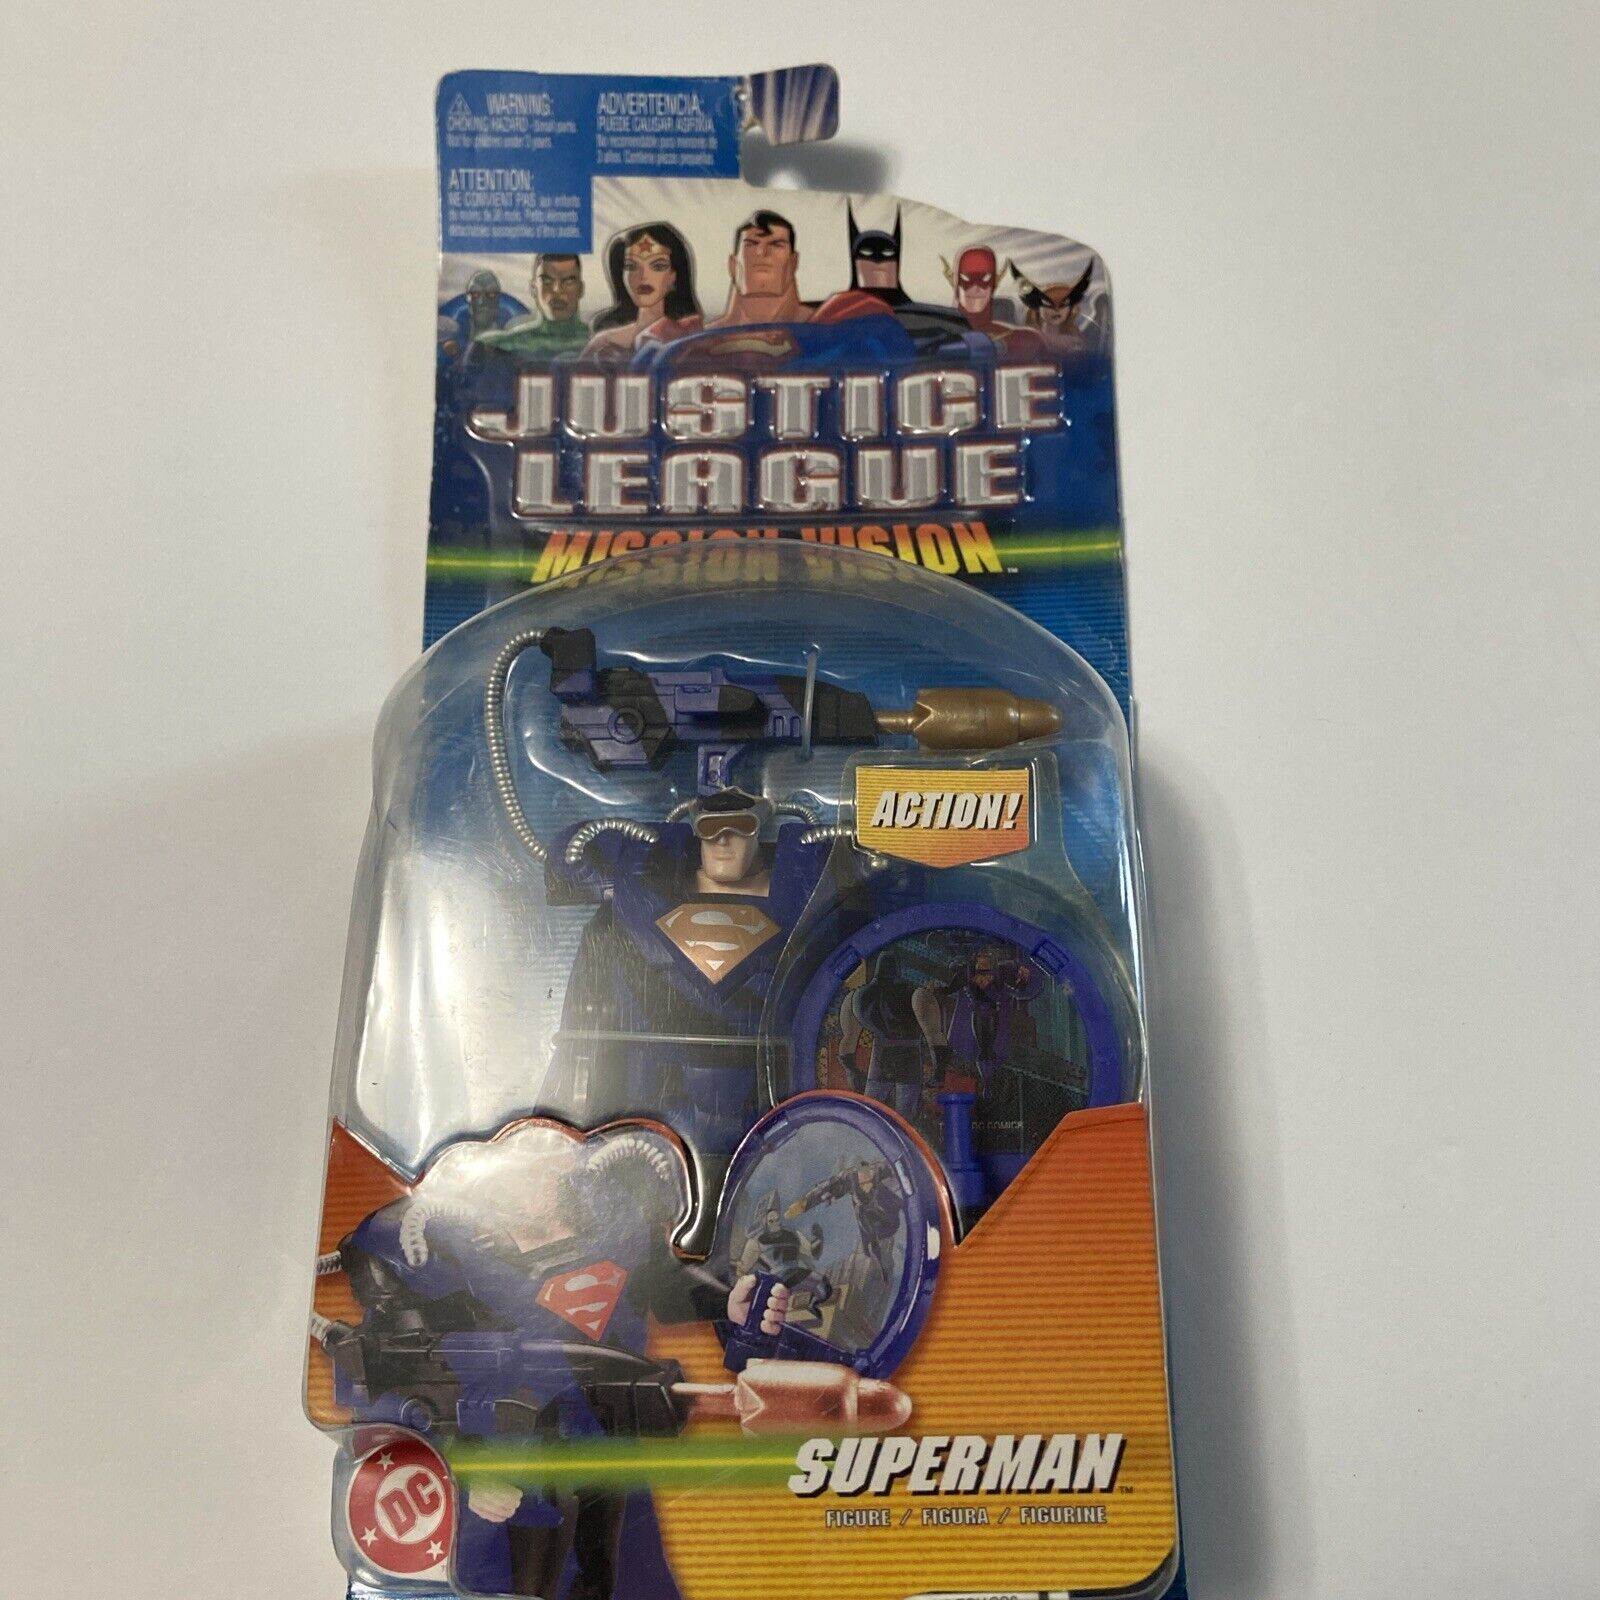 Mission Vision Superman 3767  (DC Justice League Unlimited, Mattel)appear Sealed